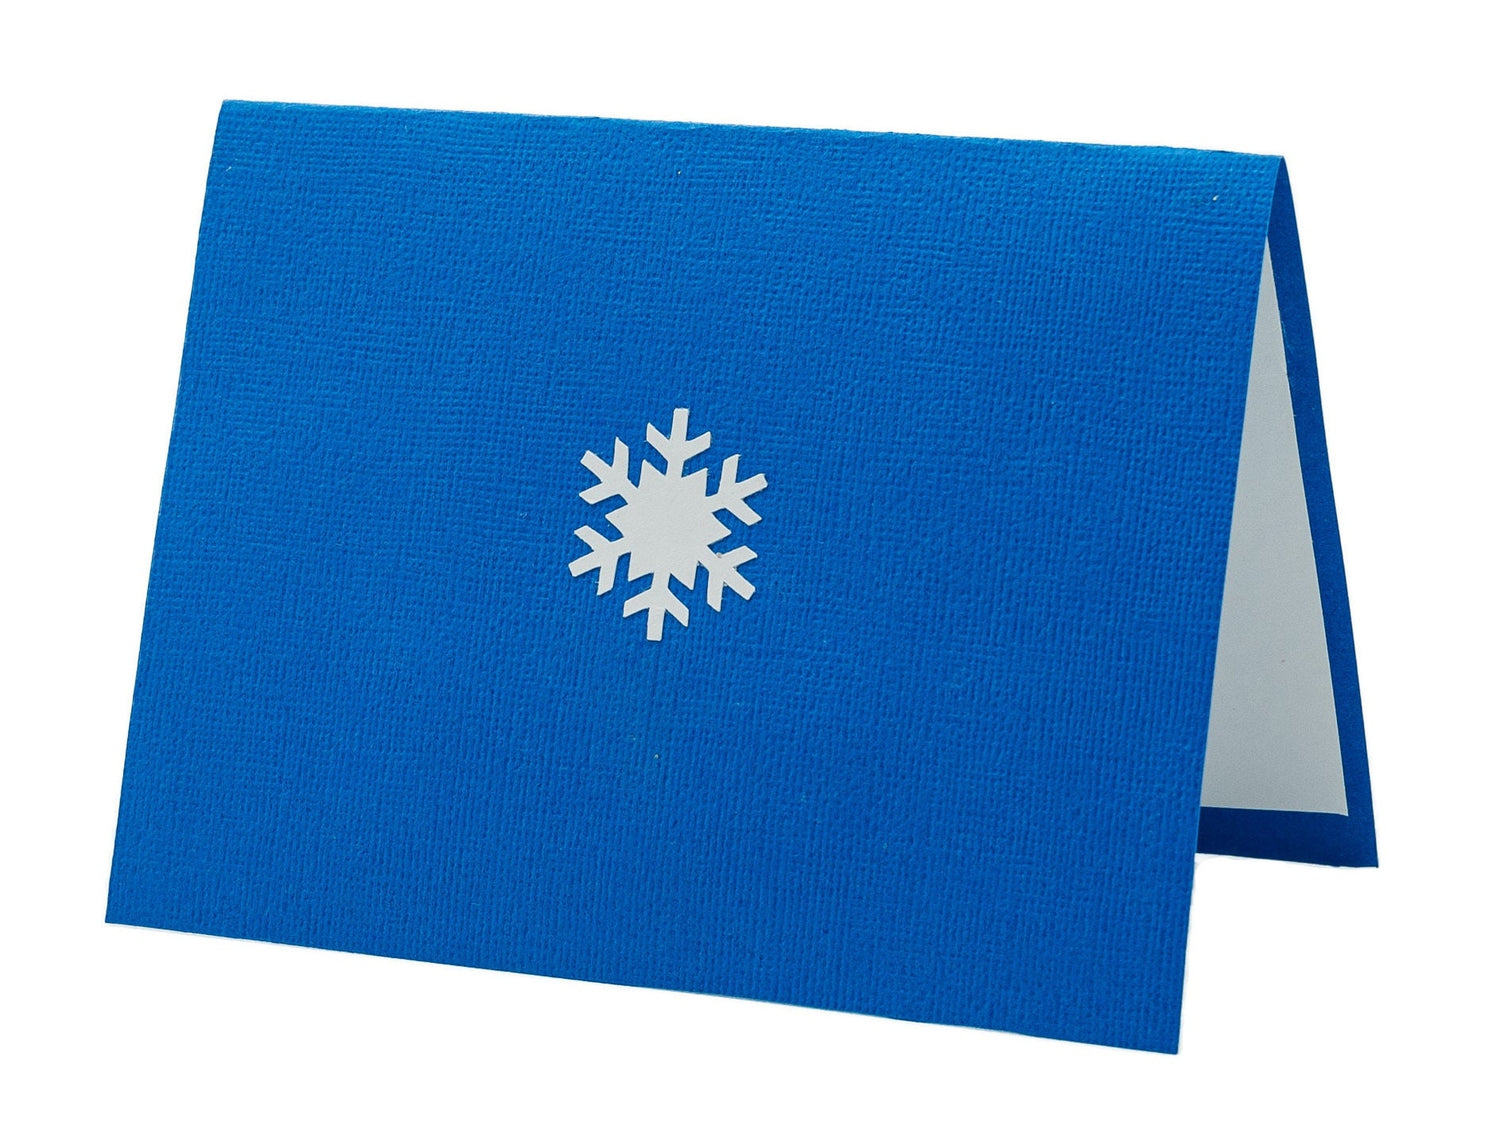 Happy Holidays Snowflake Pop Up 3D Greeting Card | Customizable Greeting Card | Christmas Season Gifts | Holiday Cheer Decor | Simple Design